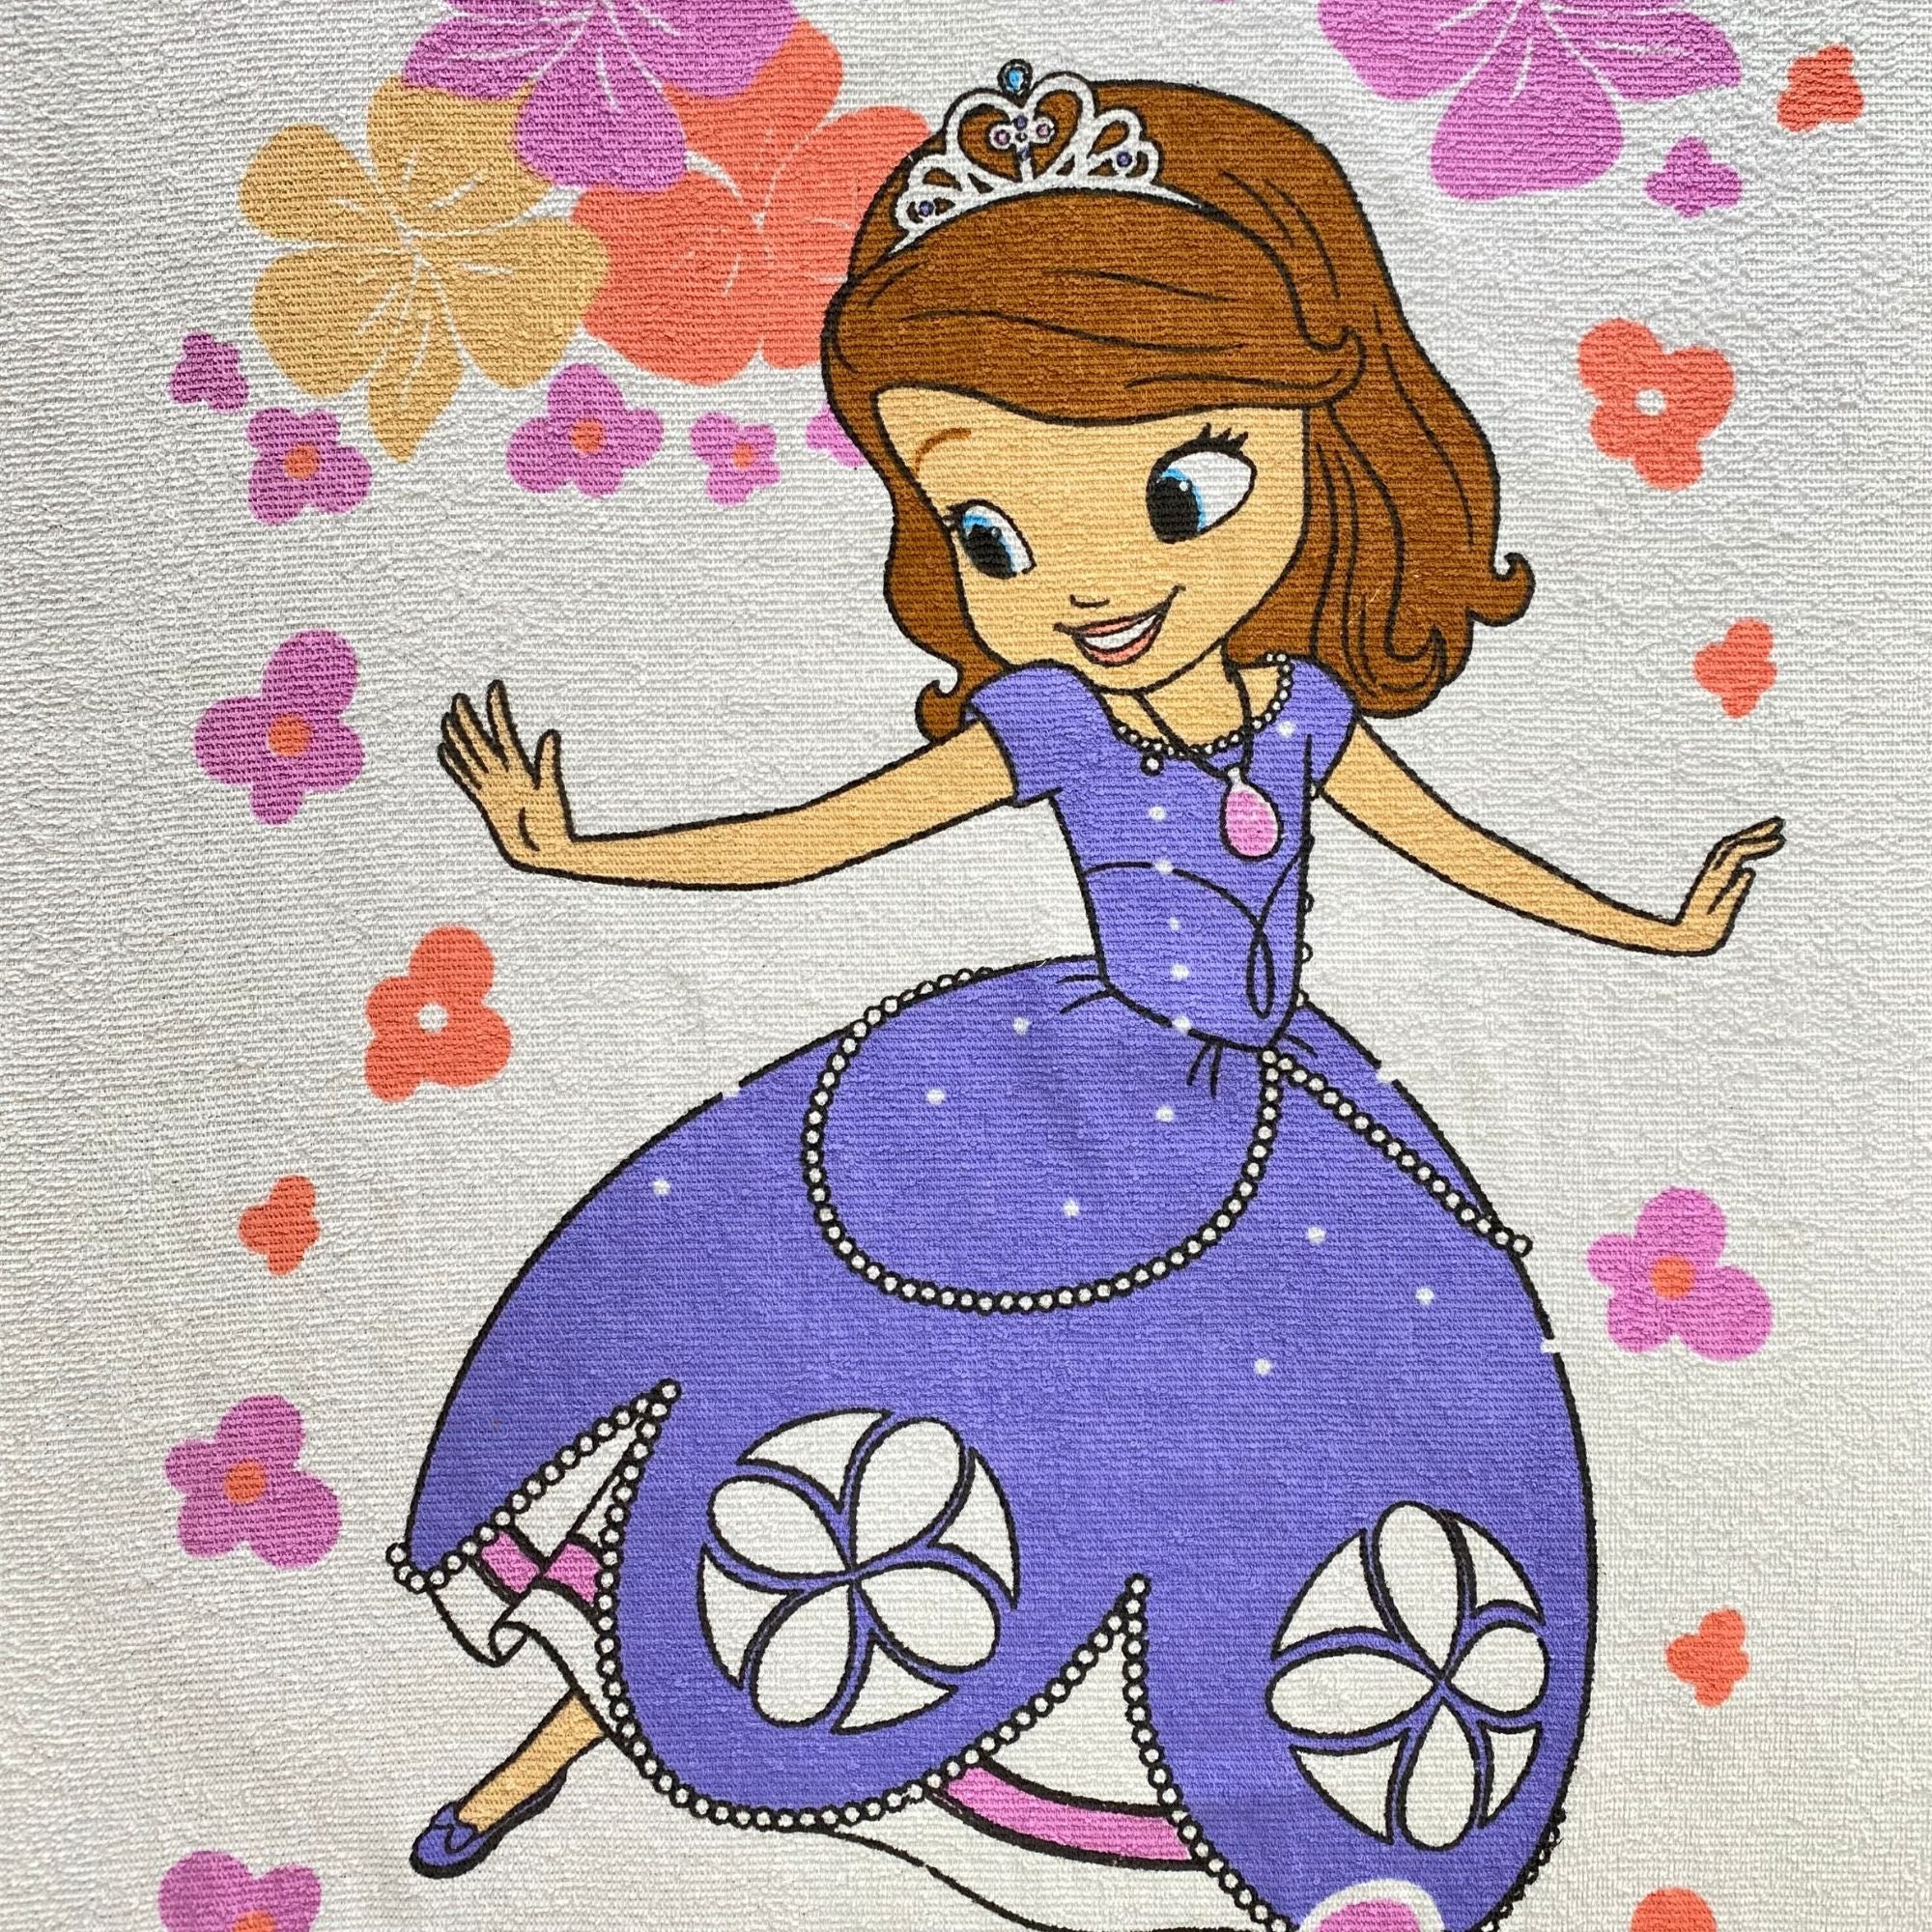 Toalla infantil Princesa Sofia de 60 x 120 cm.